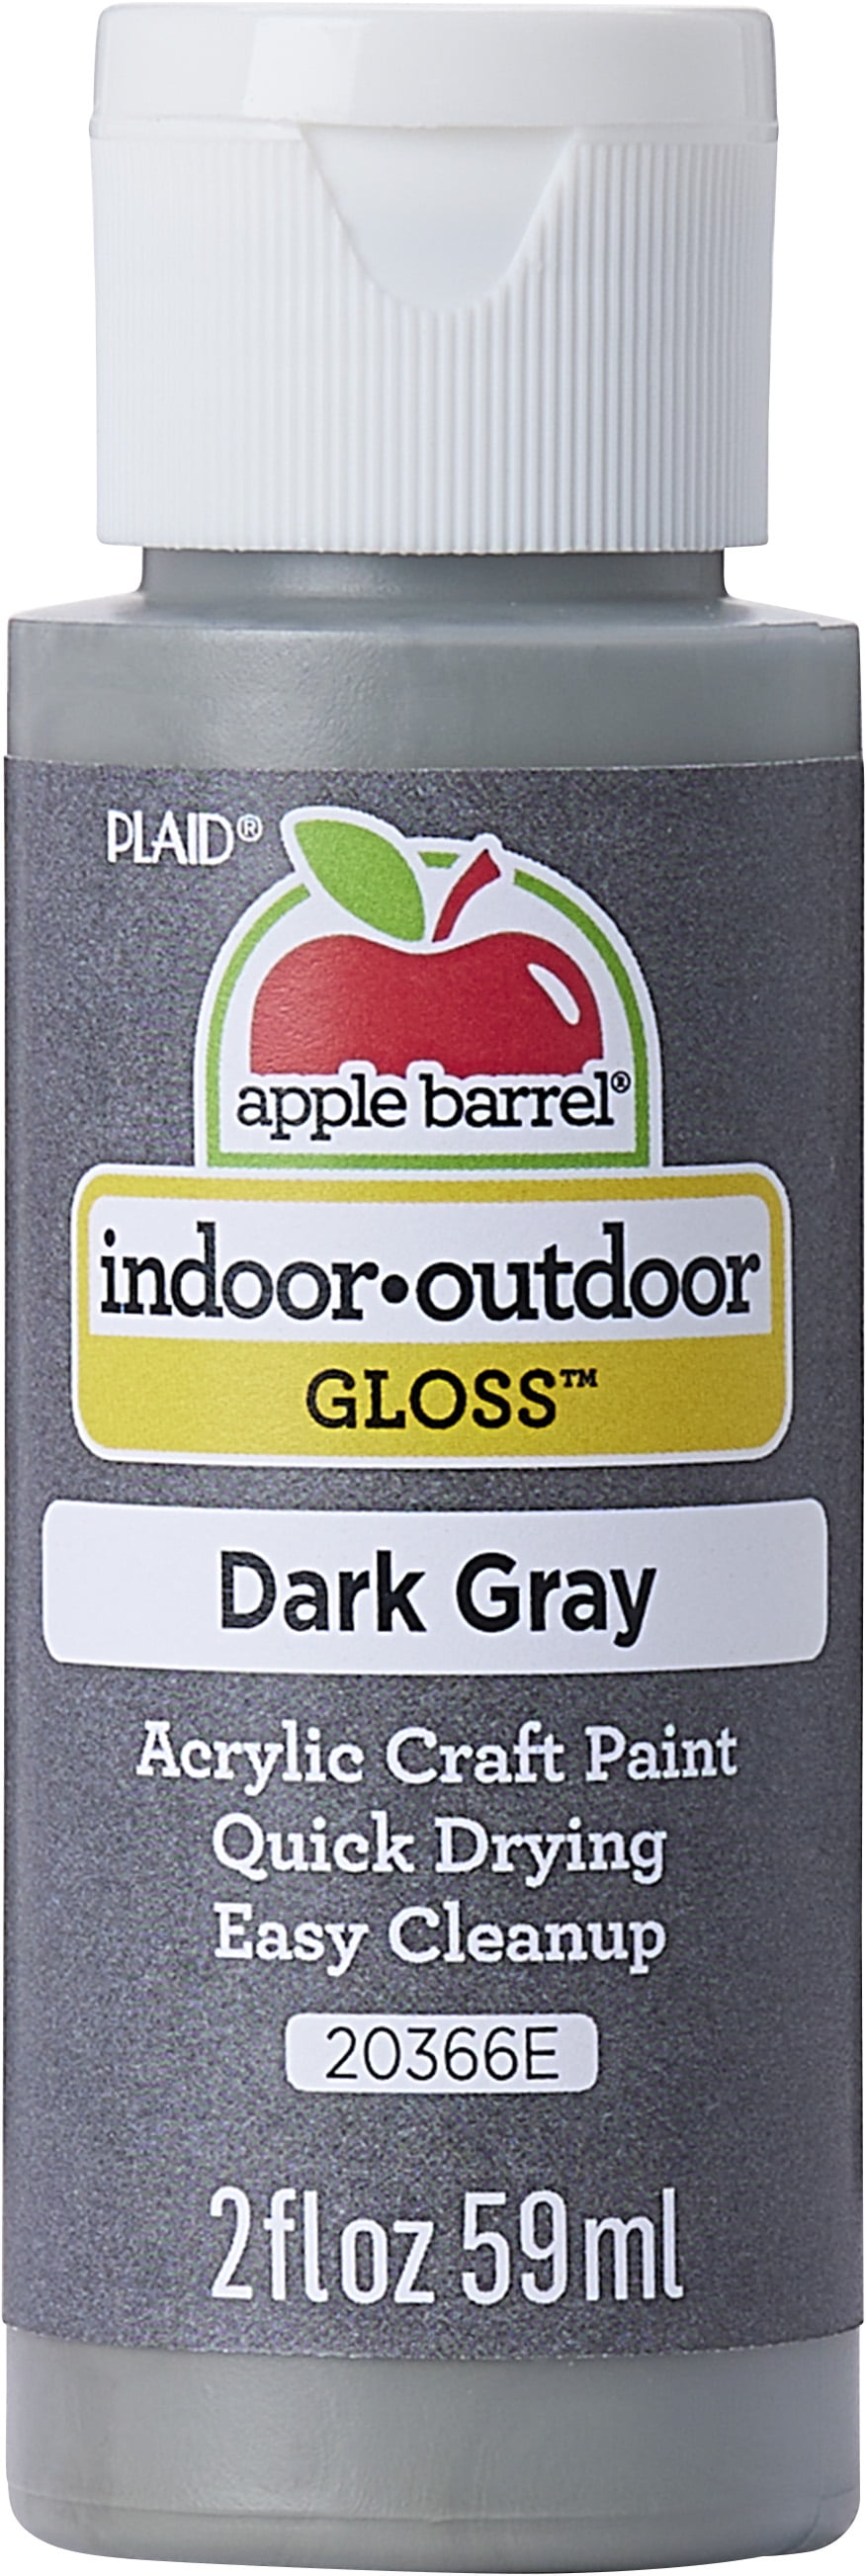 Apple Barrel Acrylic Craft Paint, Gloss Finish, Dark Gray, 2 fl oz